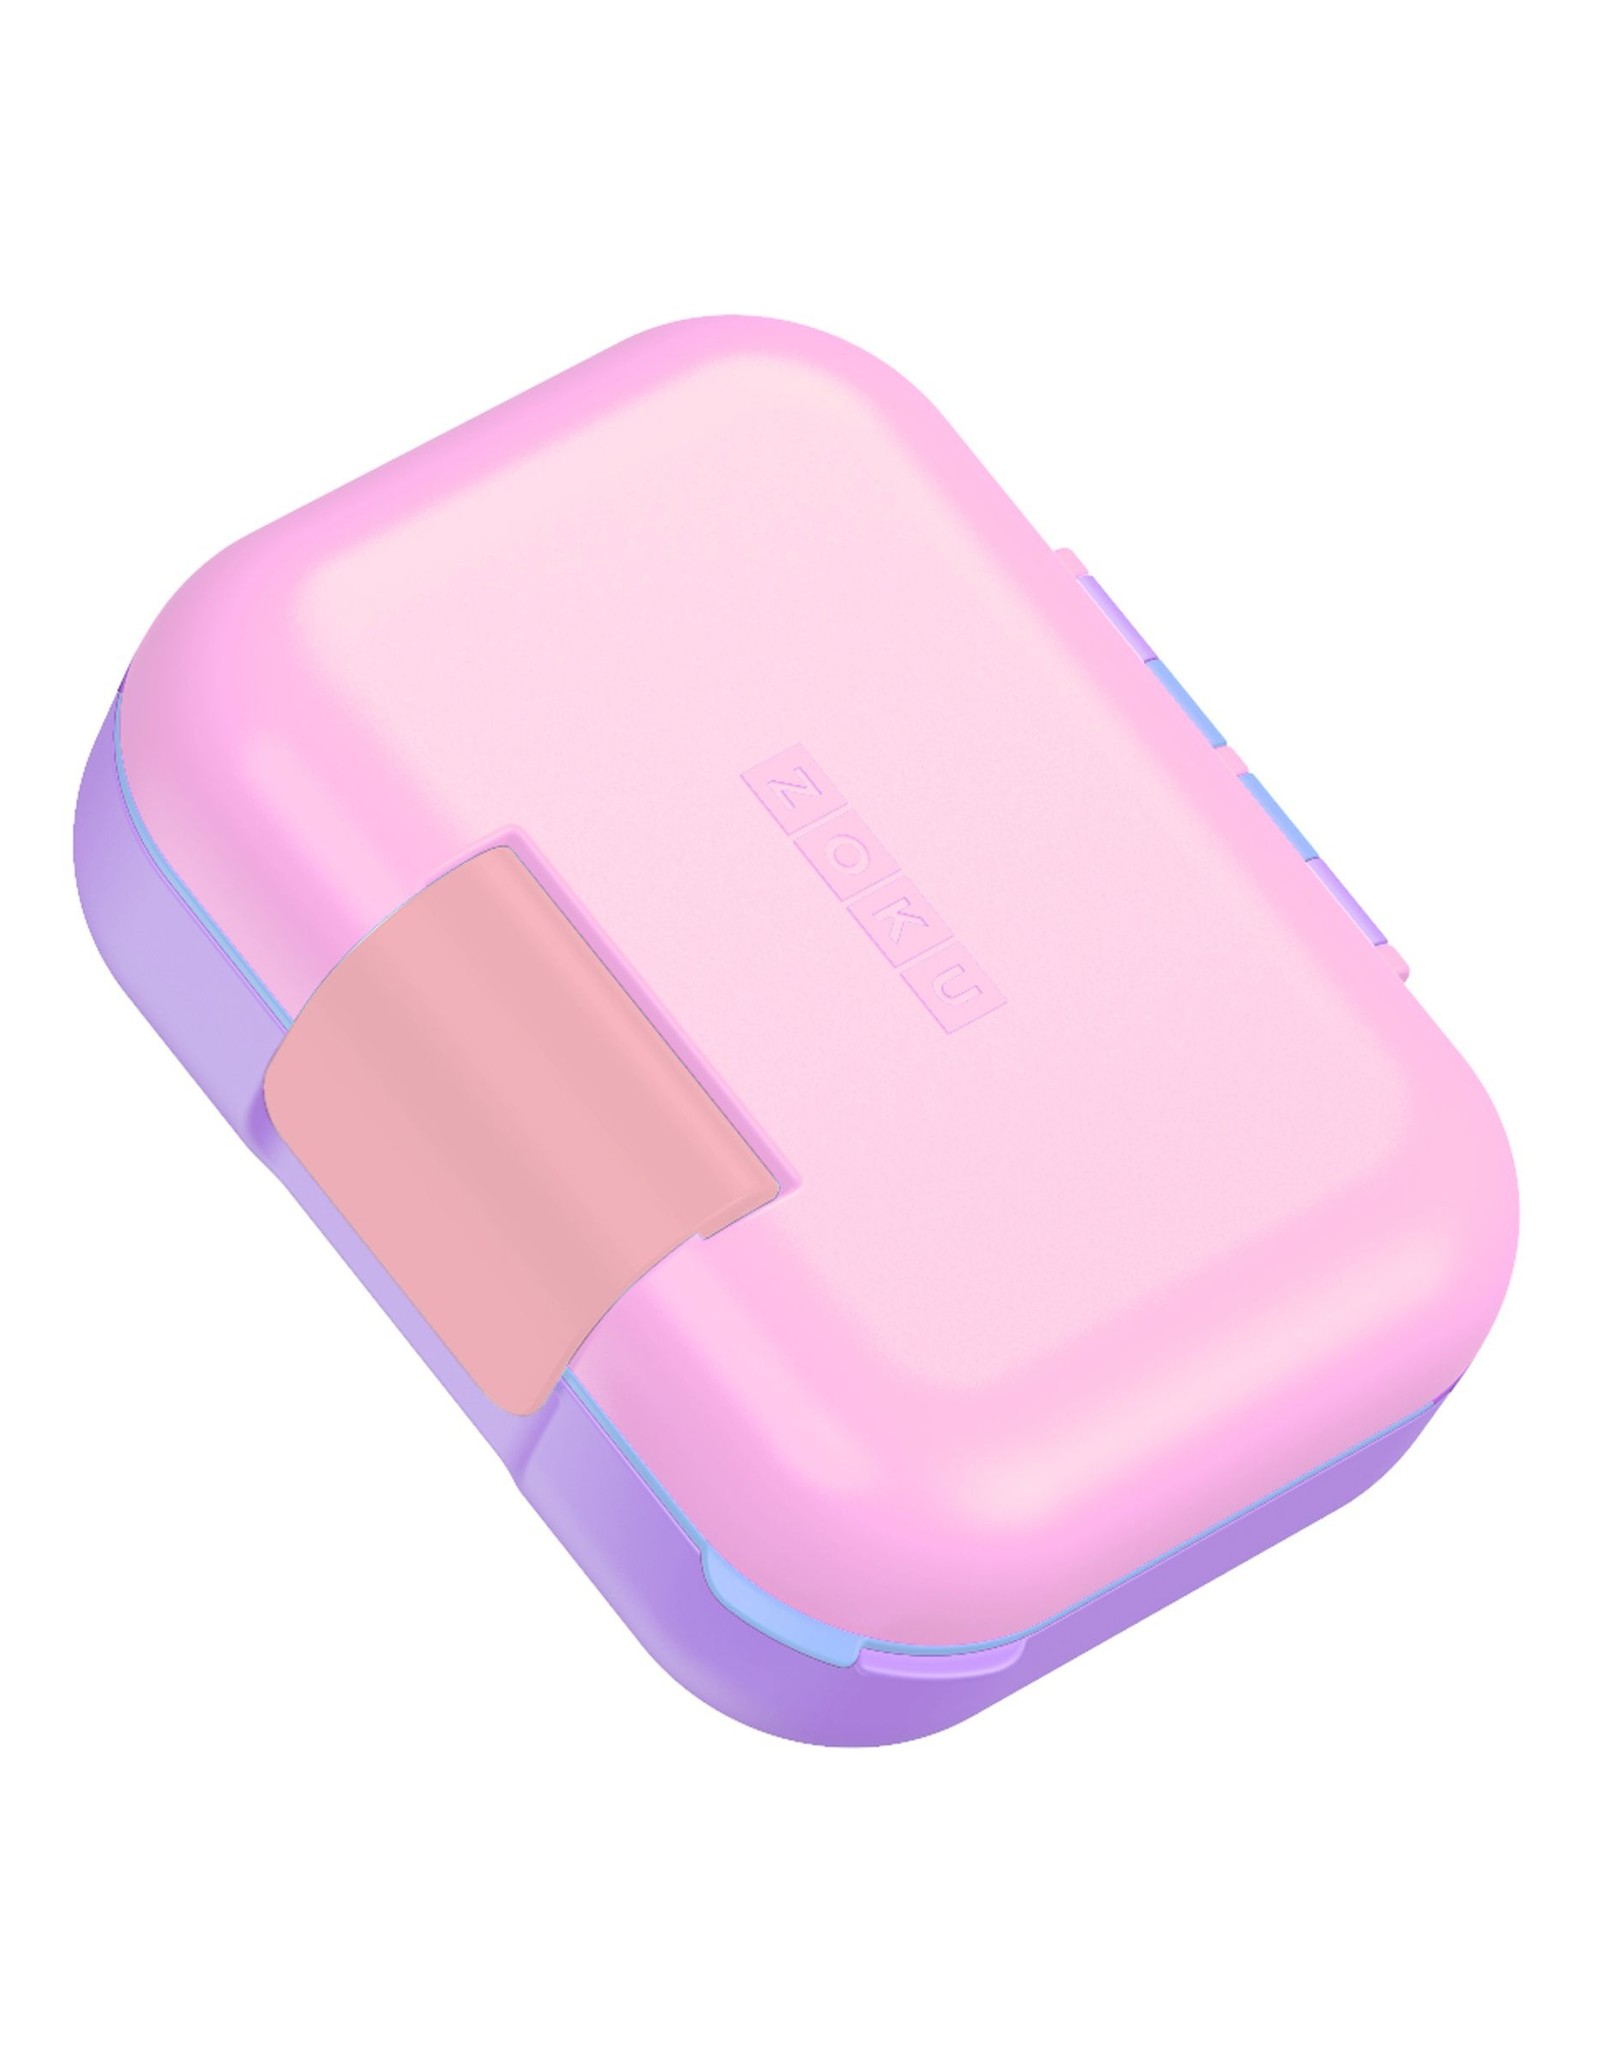 Zoku Neat Bento Lunch Box, Pink